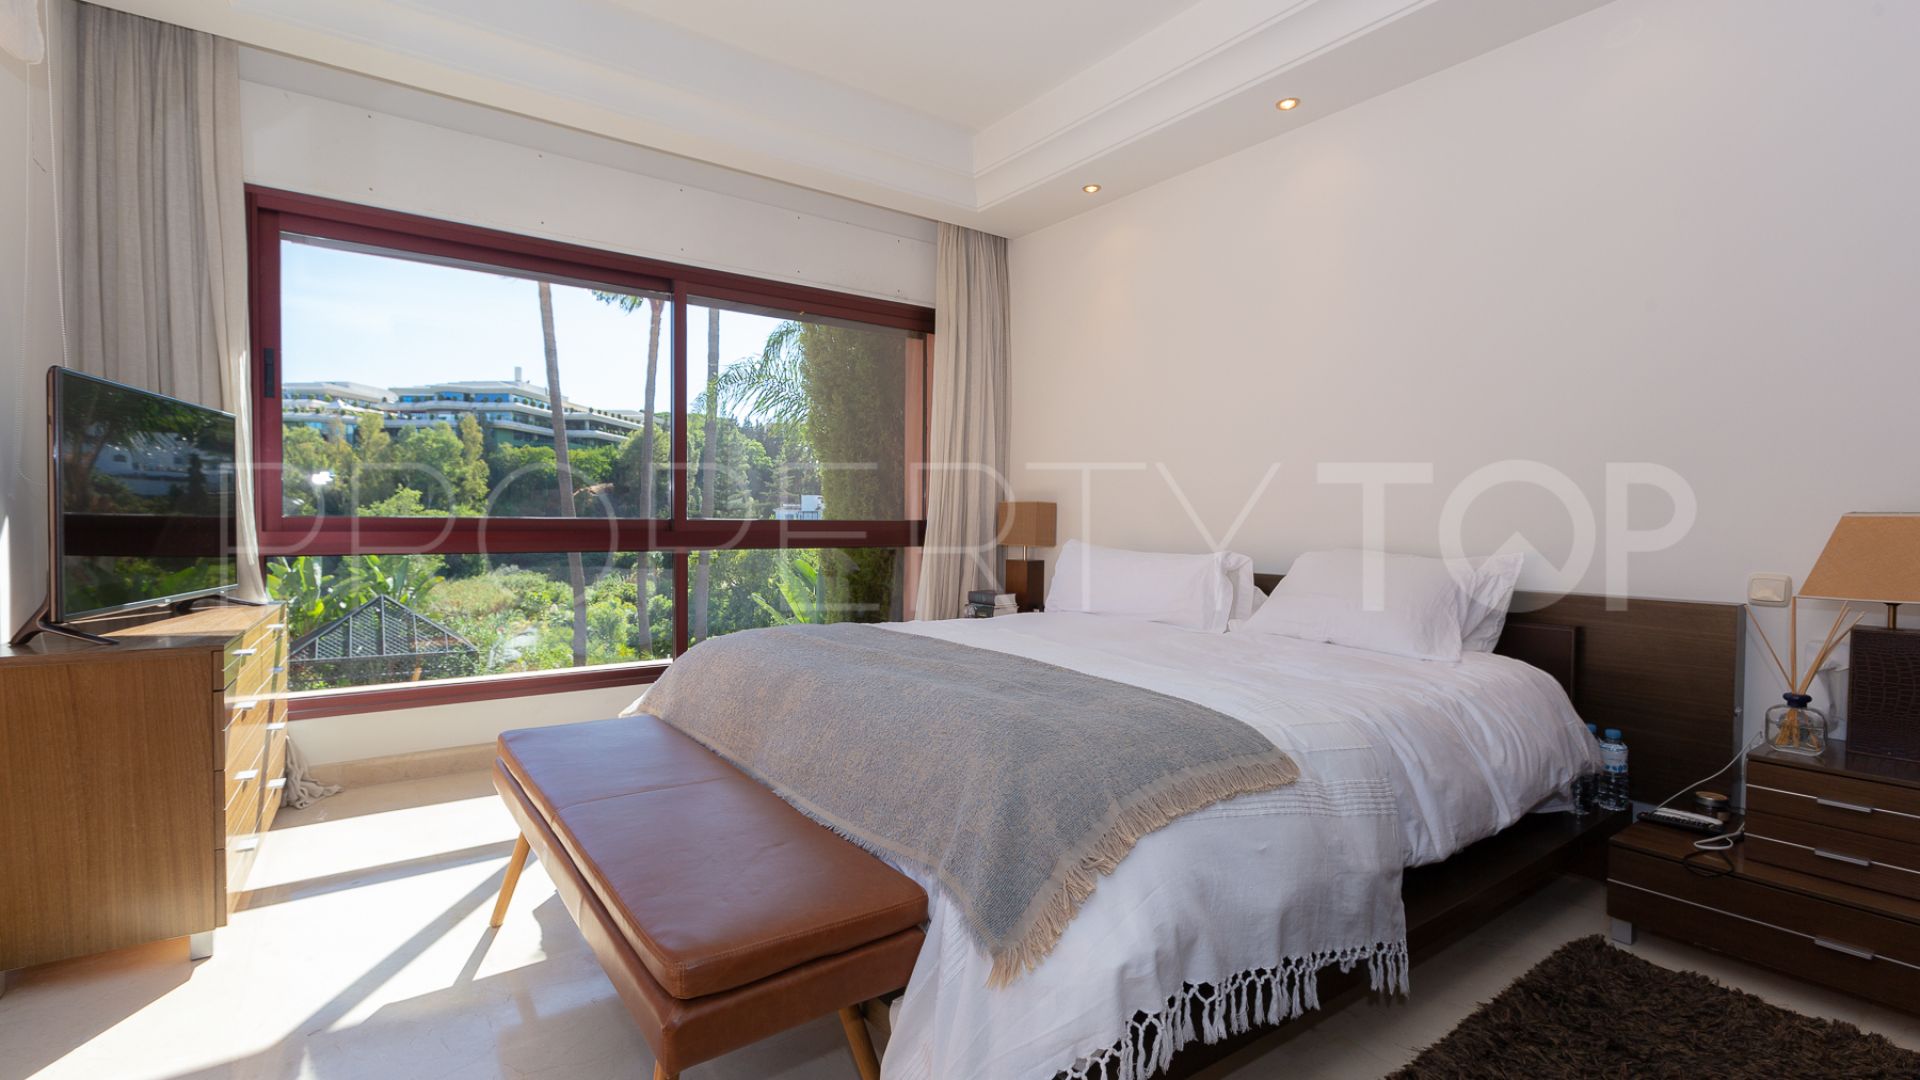 For sale villa in La Alzambra with 5 bedrooms